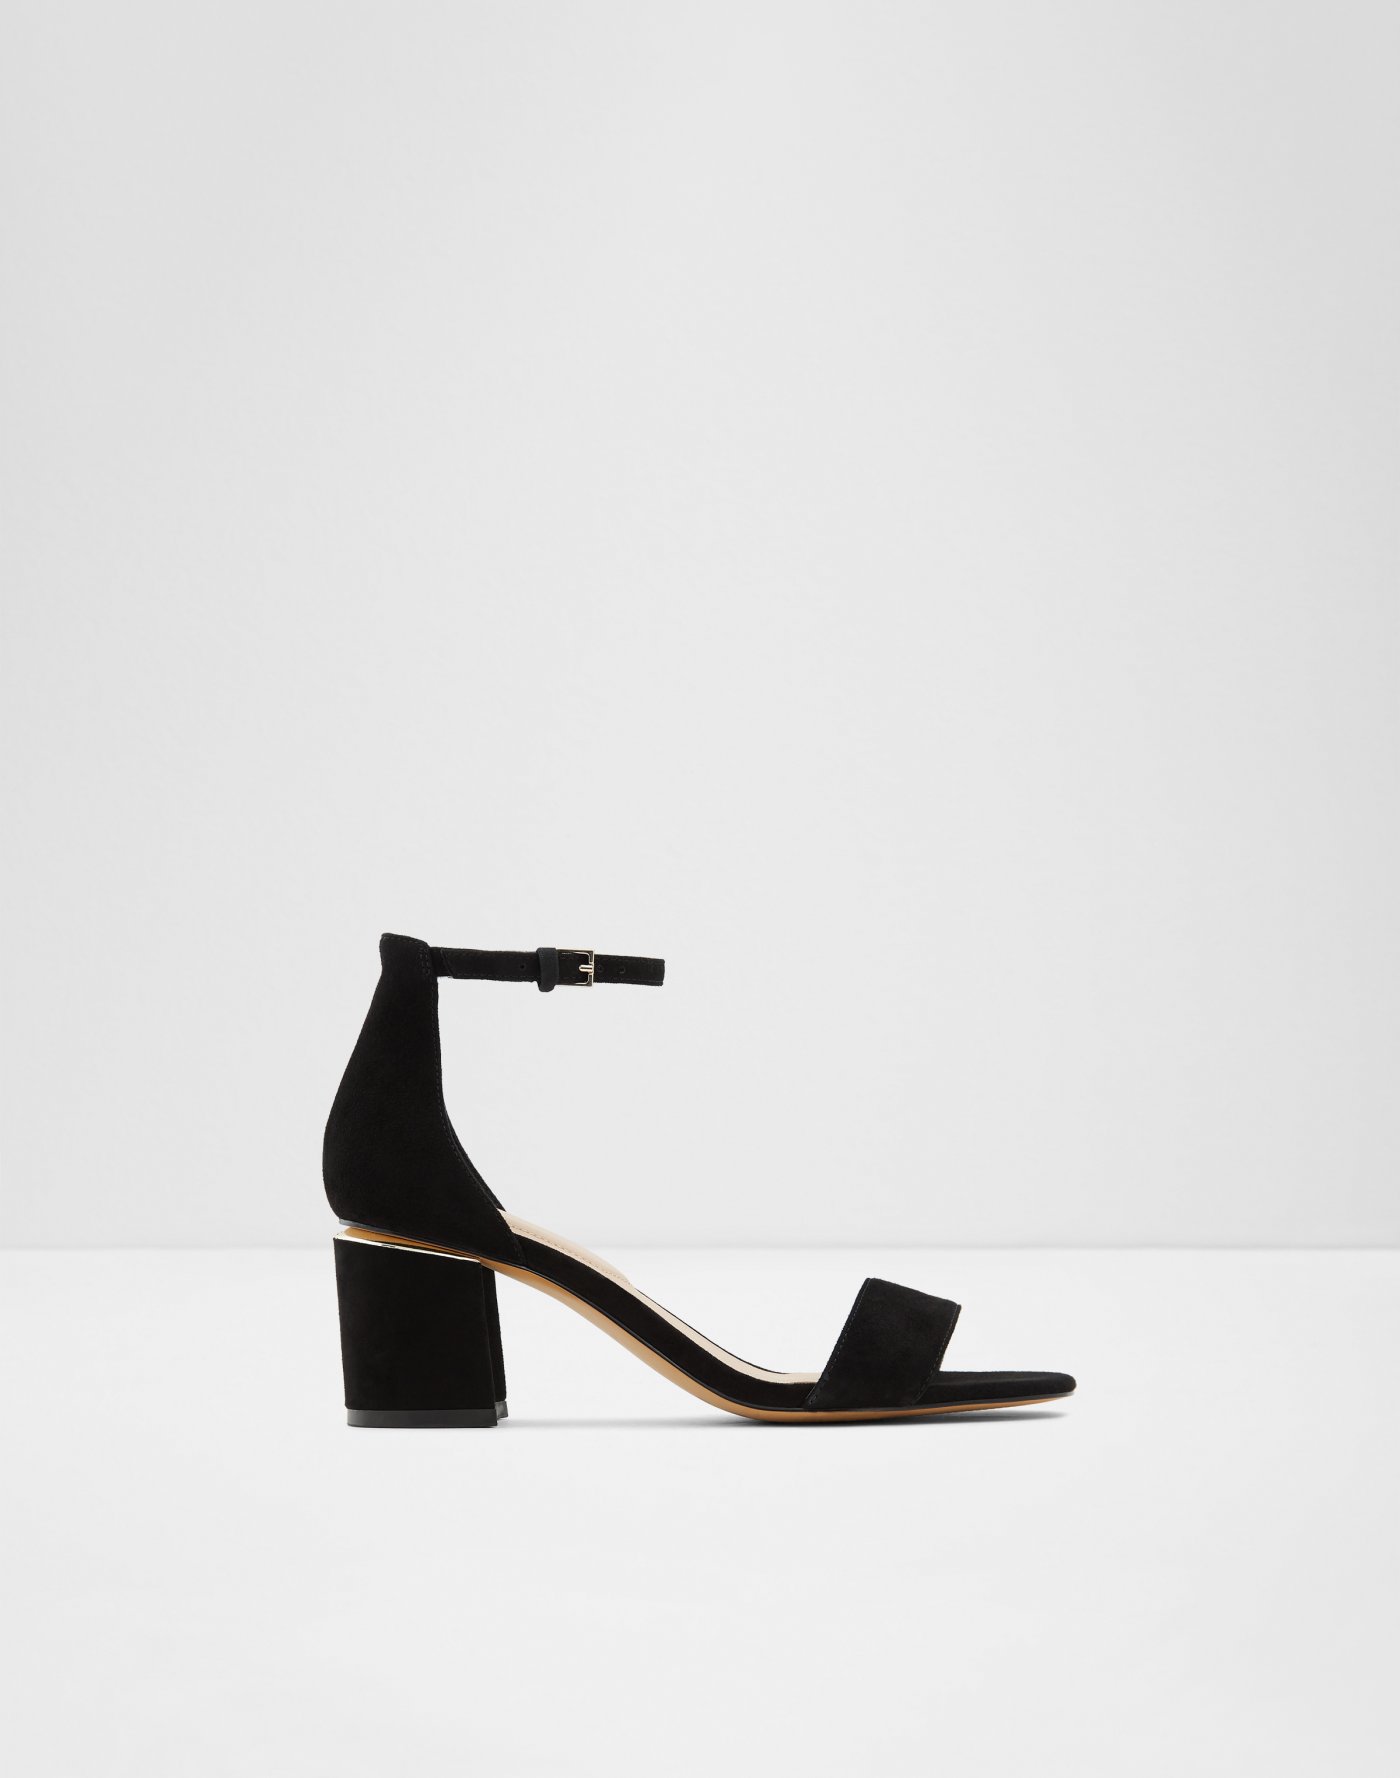 aldo shoes black heels